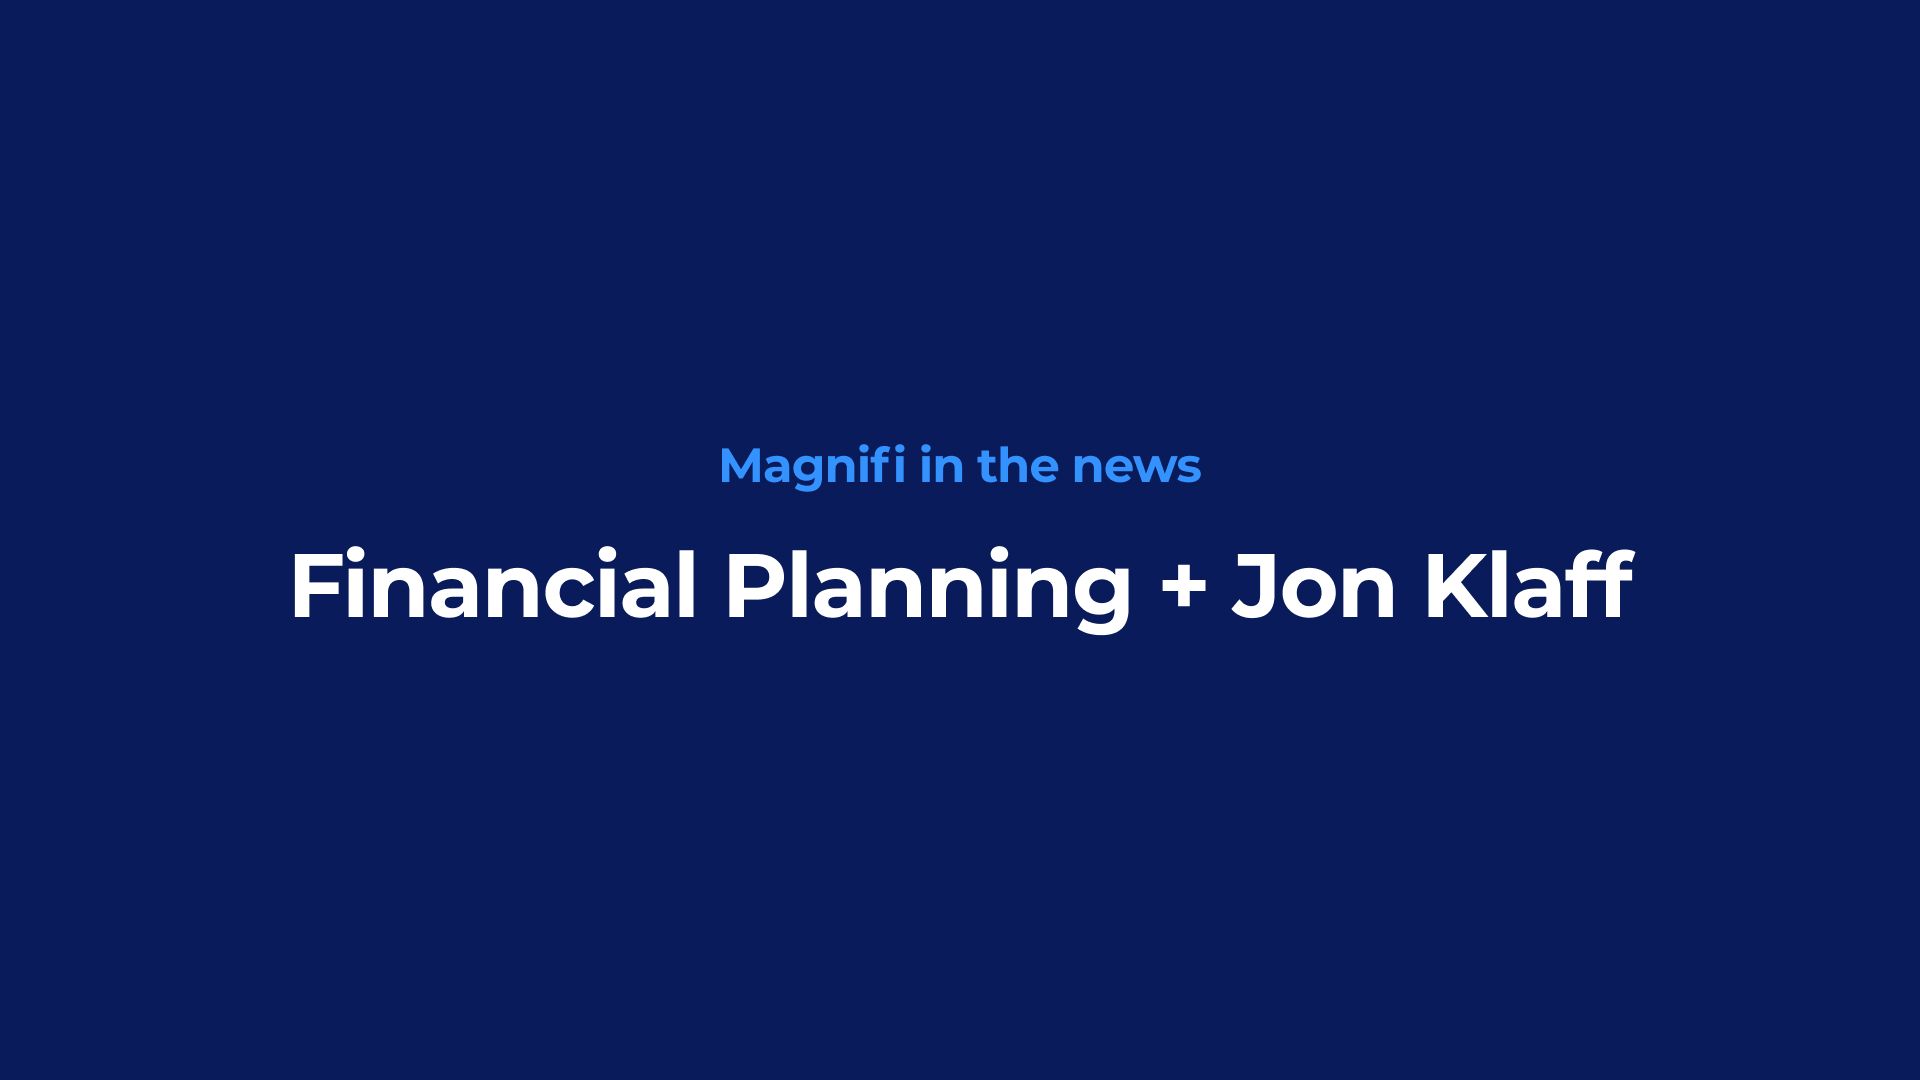 "Magnifi in the news
Financial Planning + Jon Klaff"